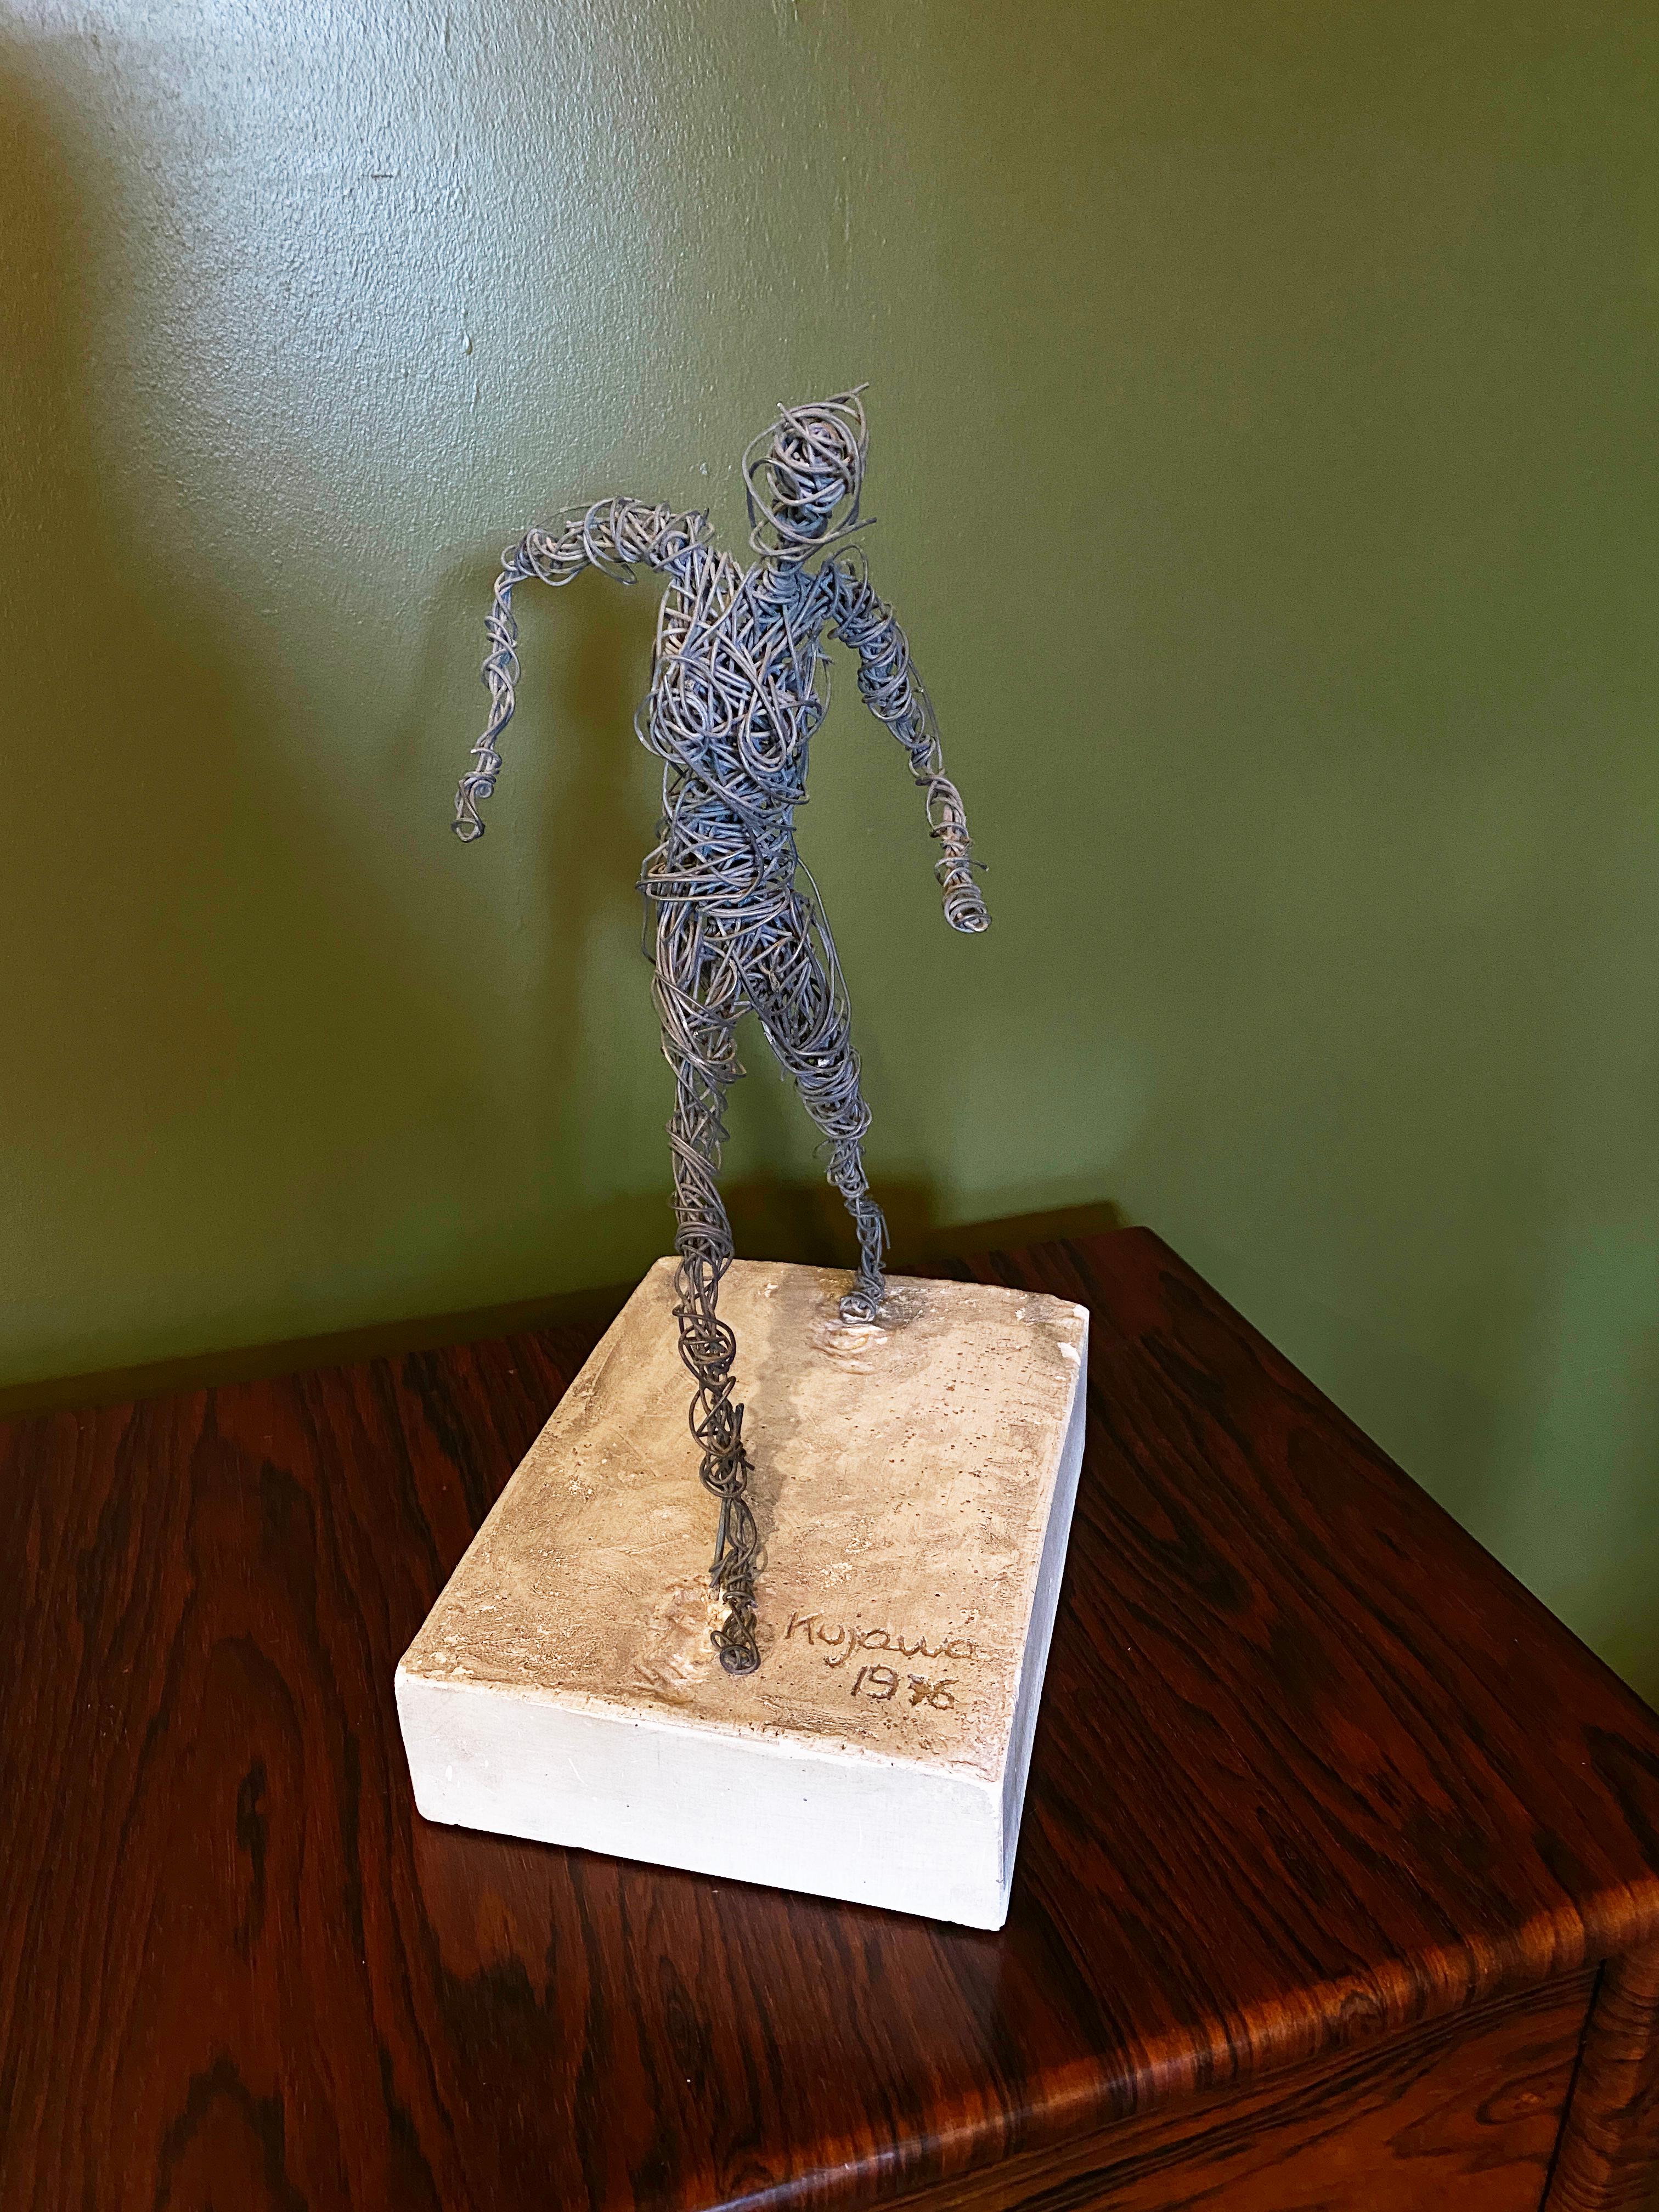 wire figure sculpture